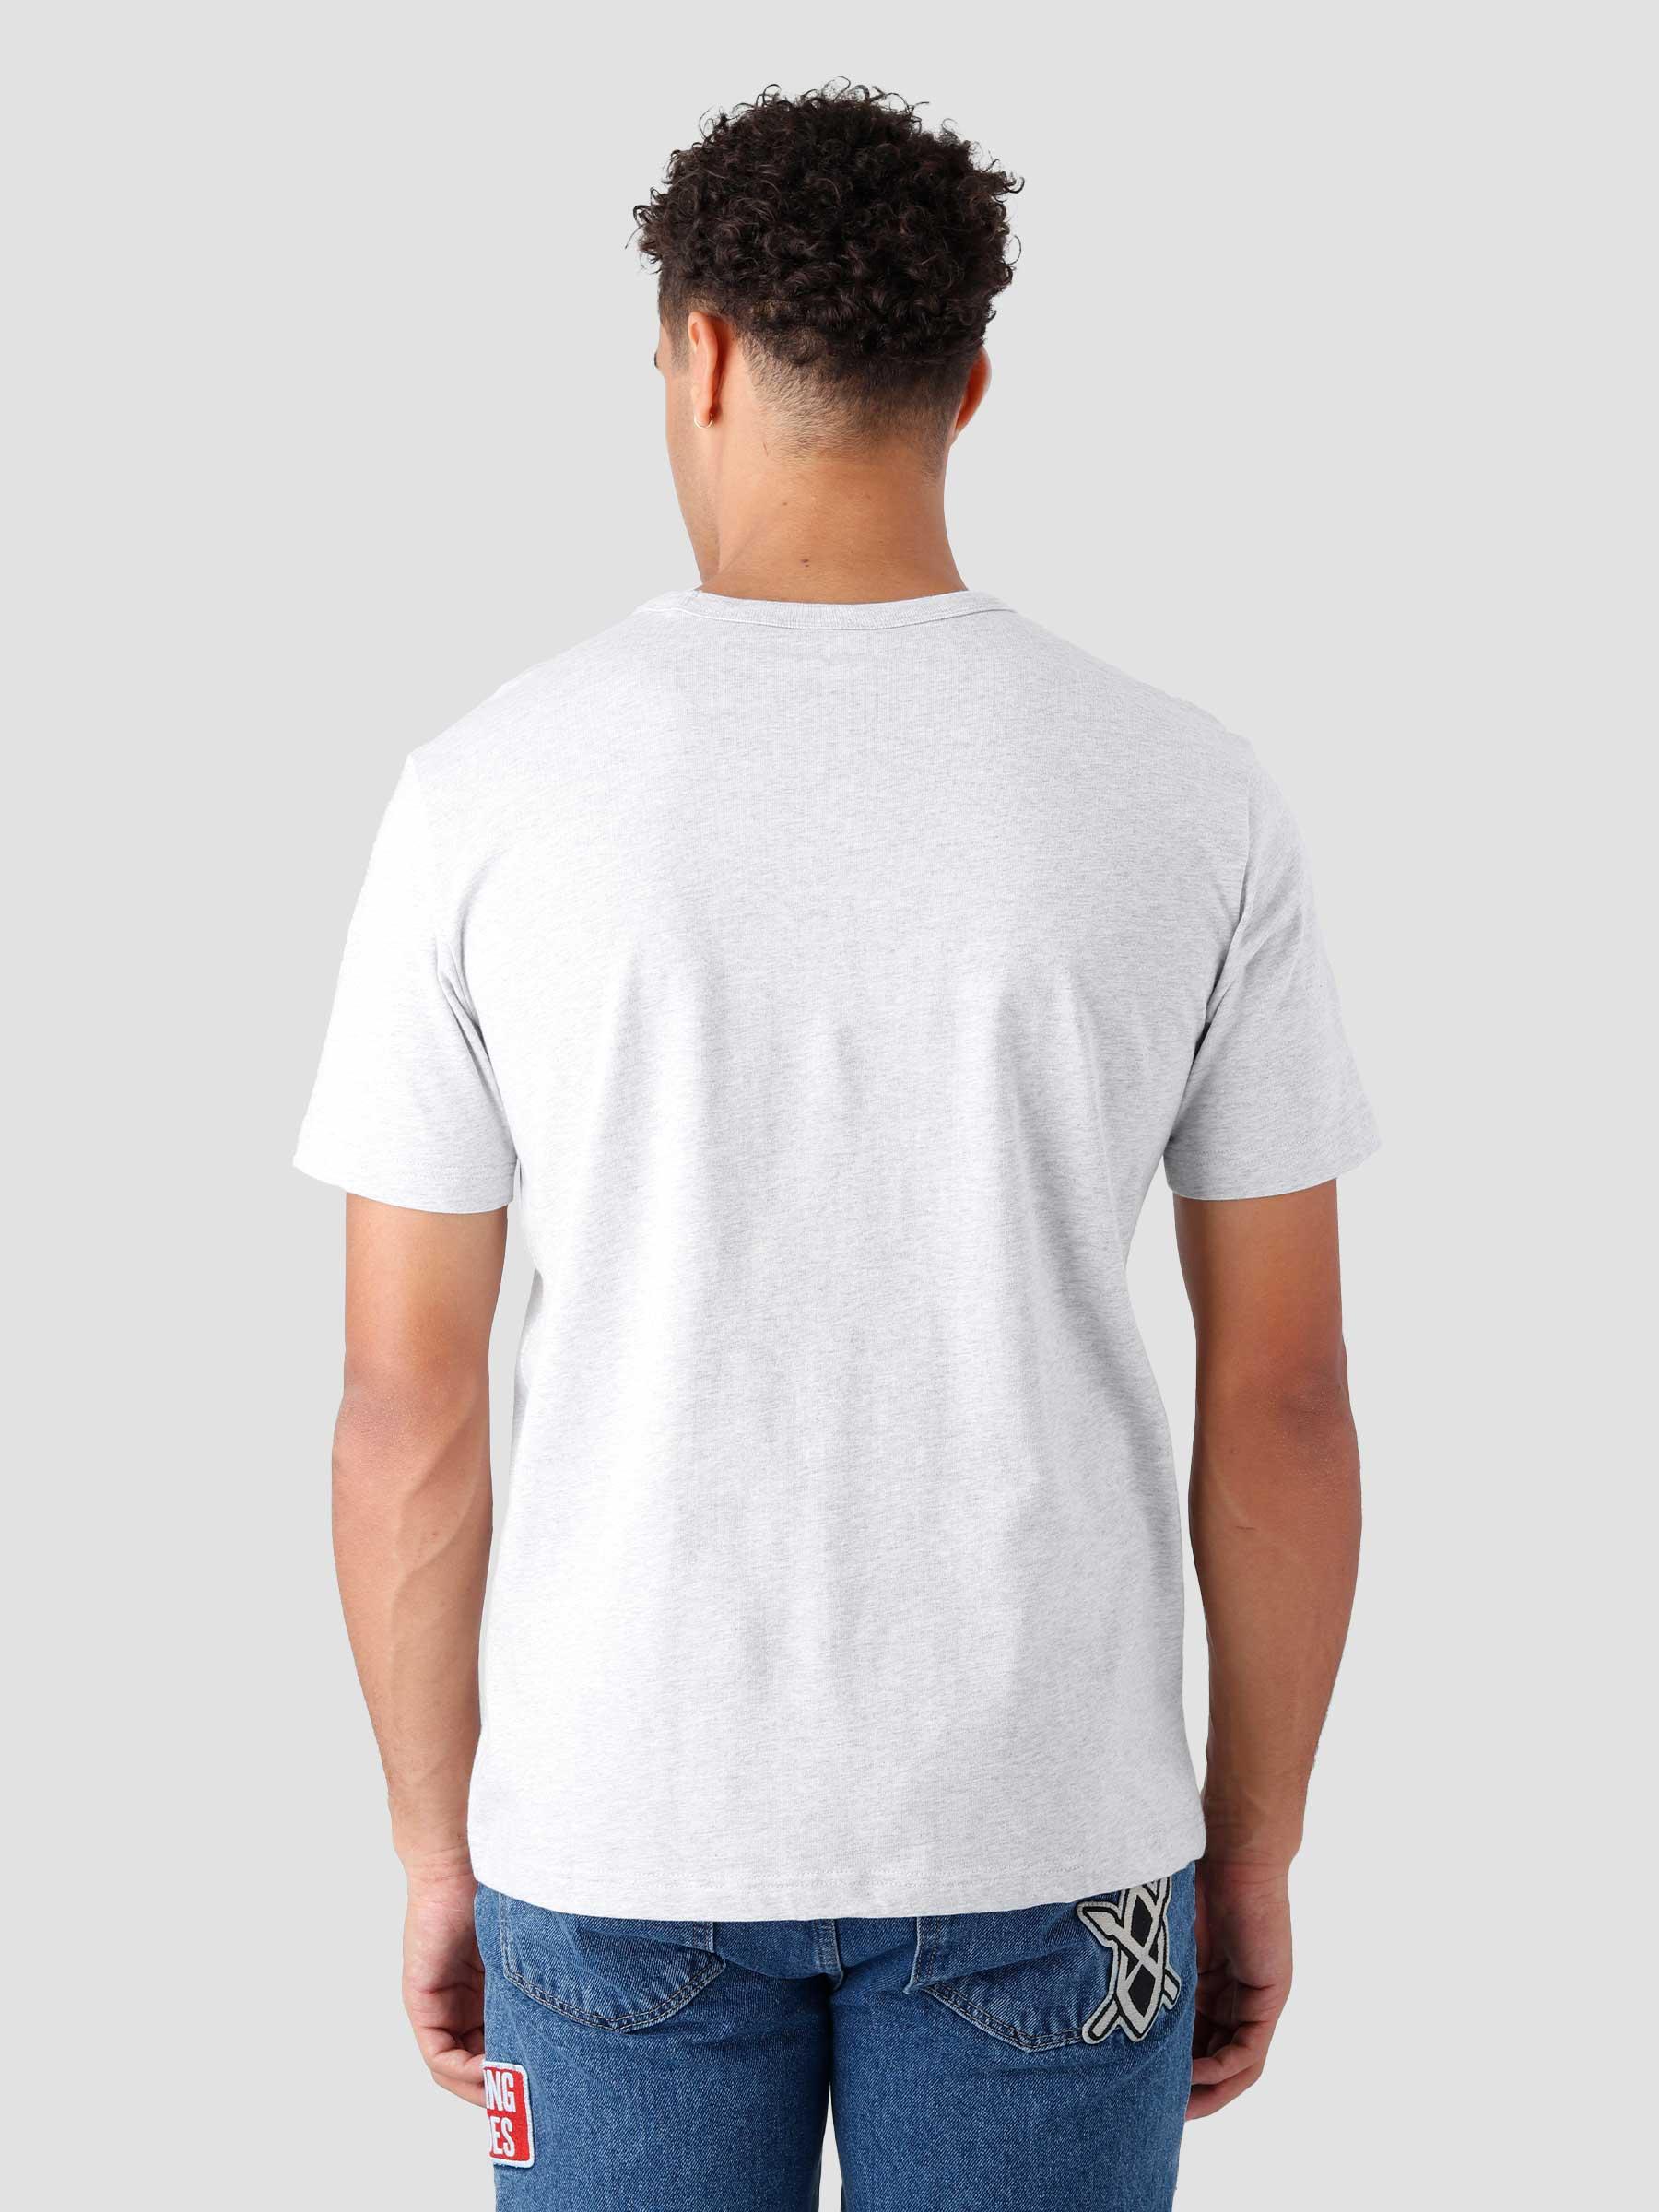 Freshcotton Light T-Shirt - Champion Crewneck Grey